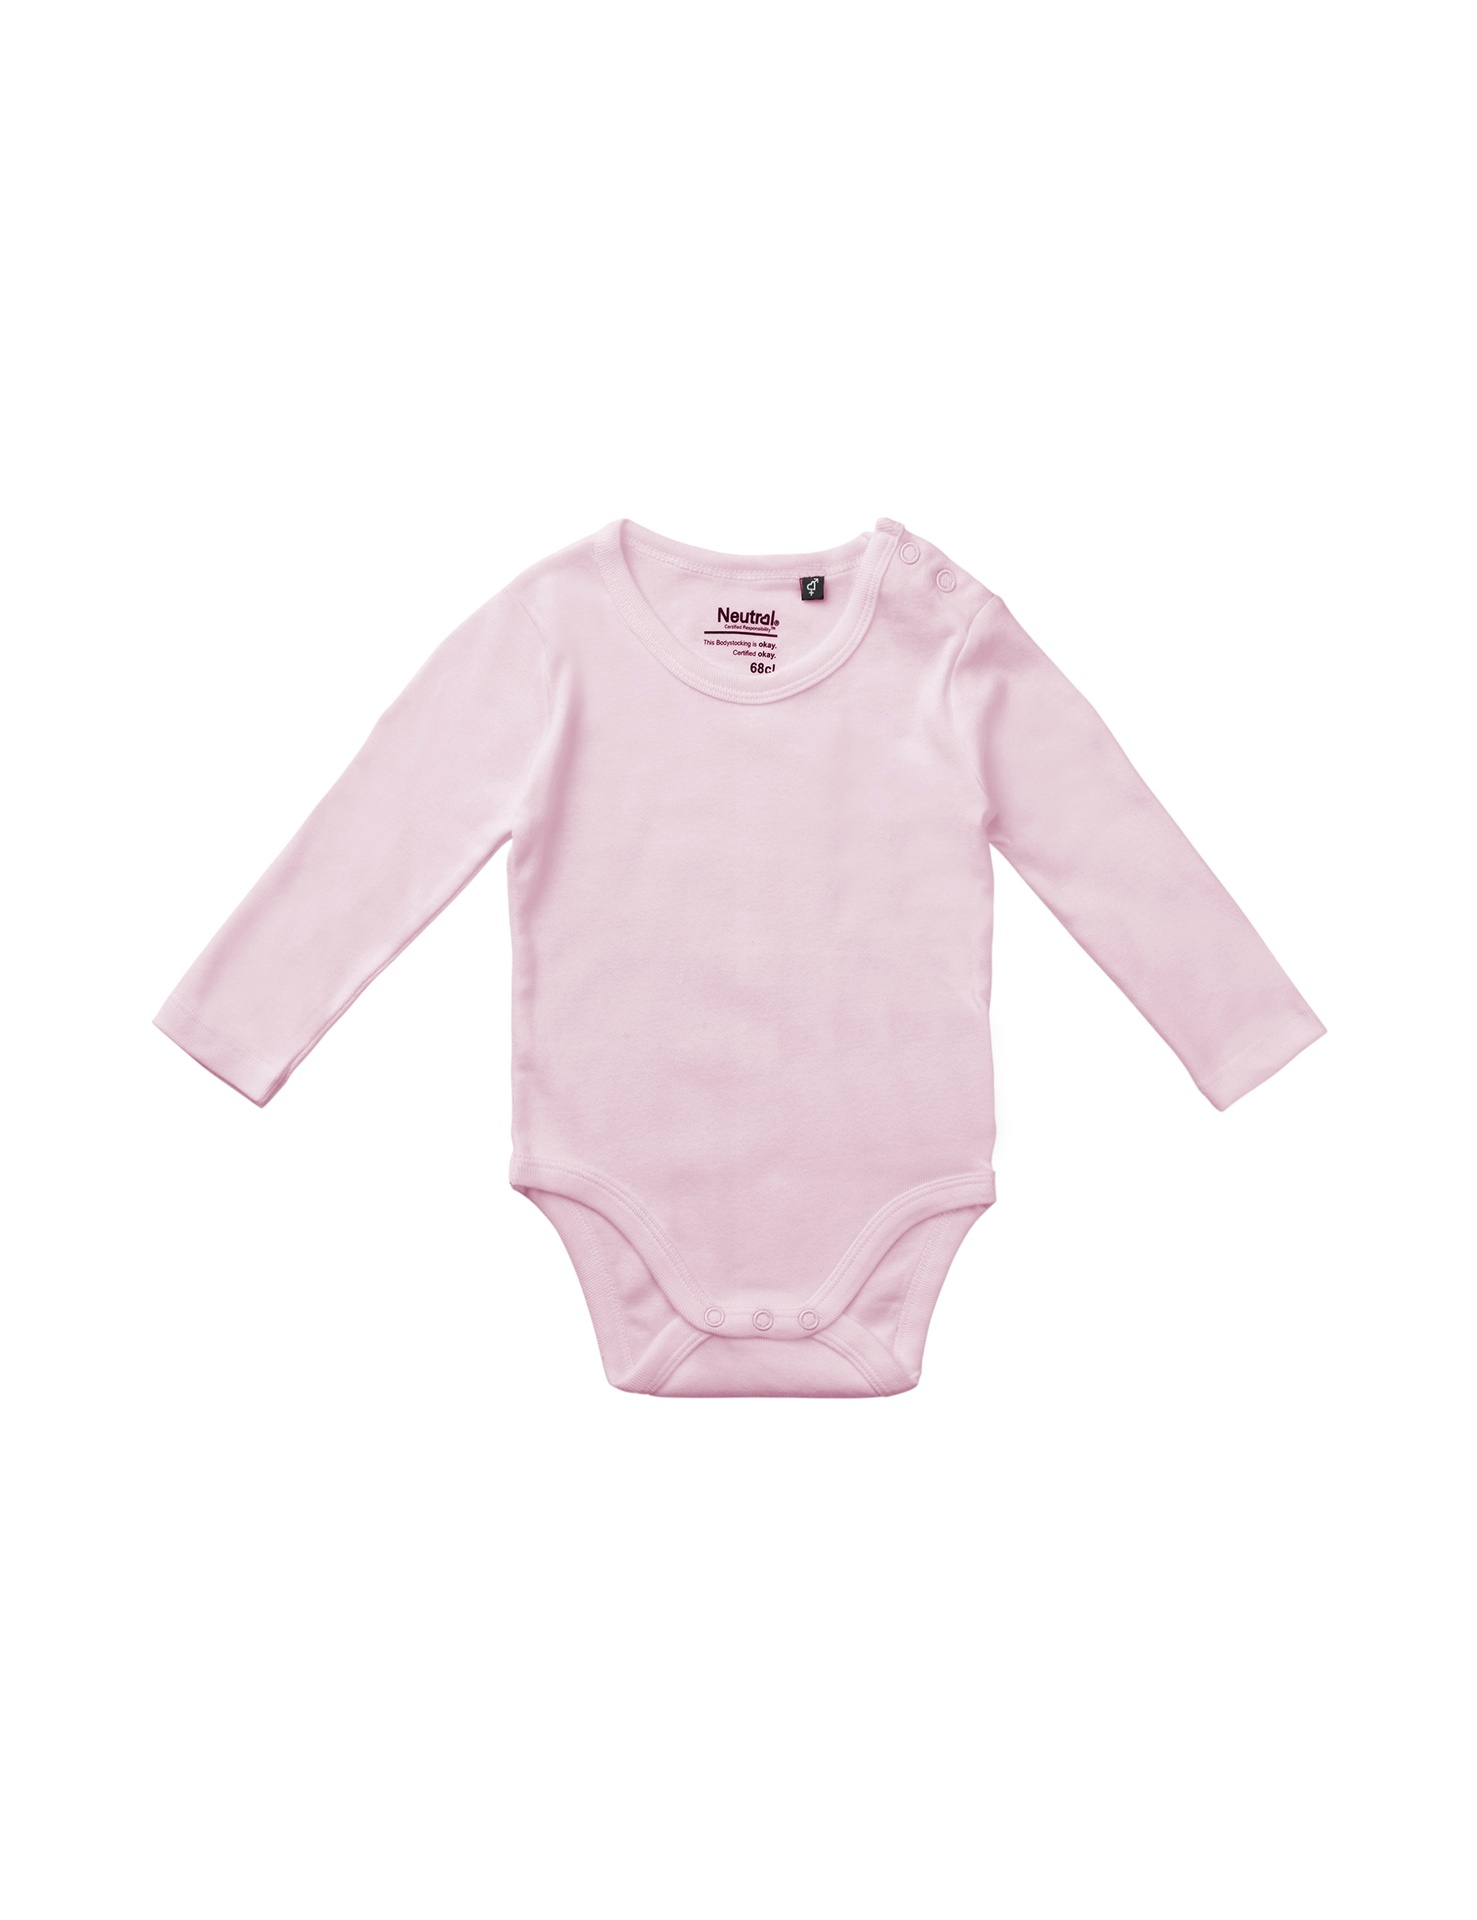 [PR/05735] Babies Long Sleeve Bodystocking (Light Pink 20, 86 cm)